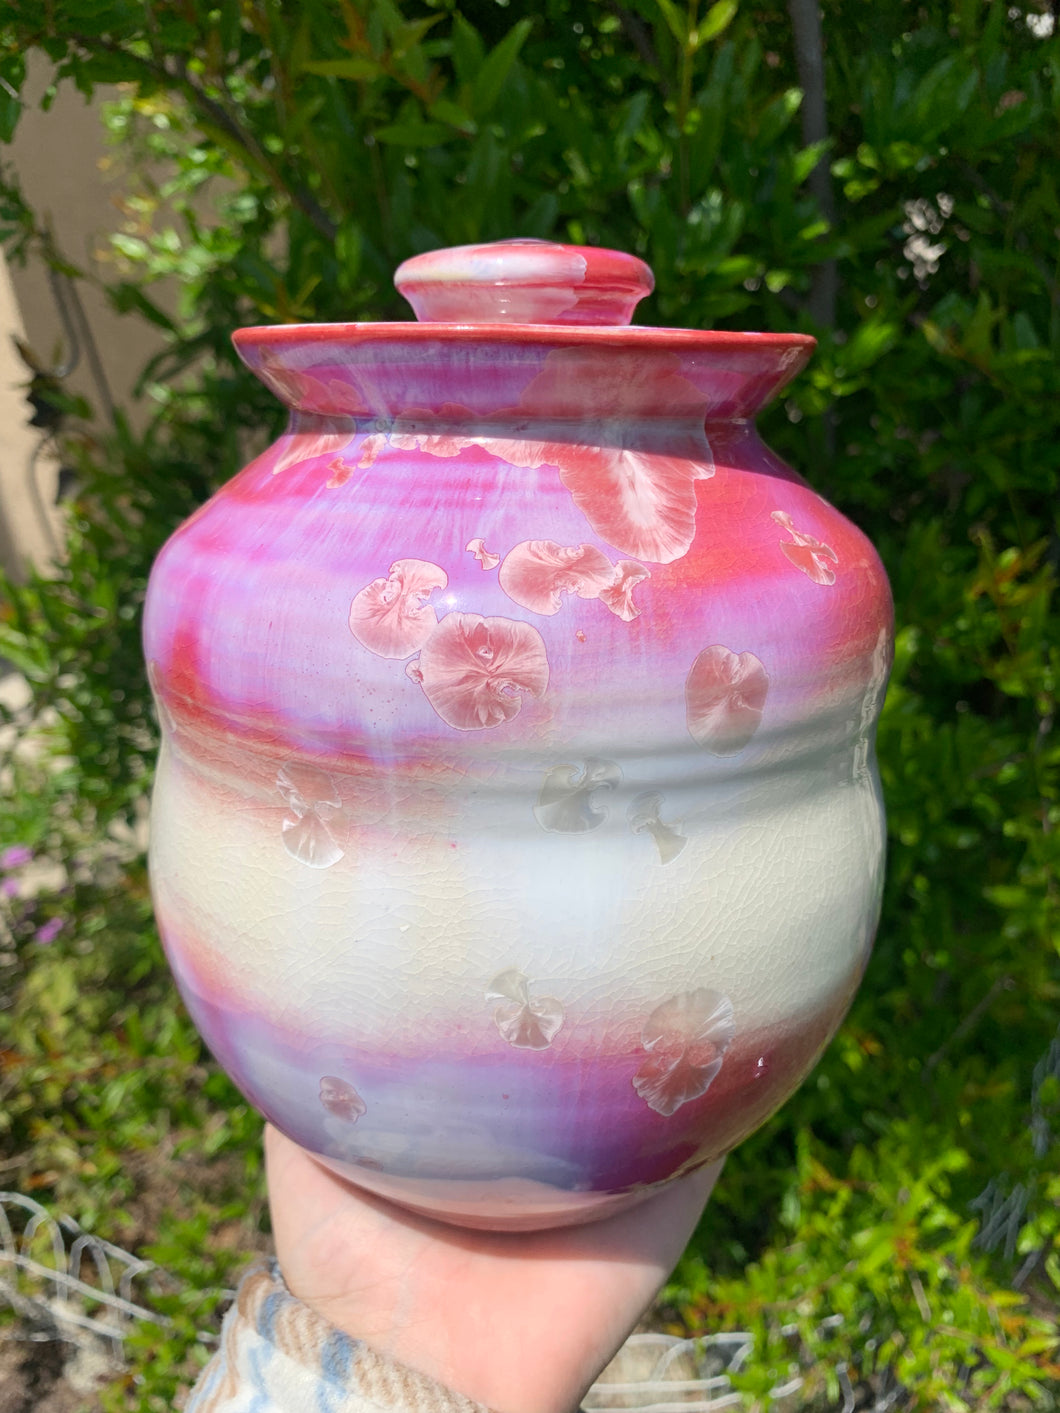 Crystalline Pottery Decorative Jar or Vase with Lid